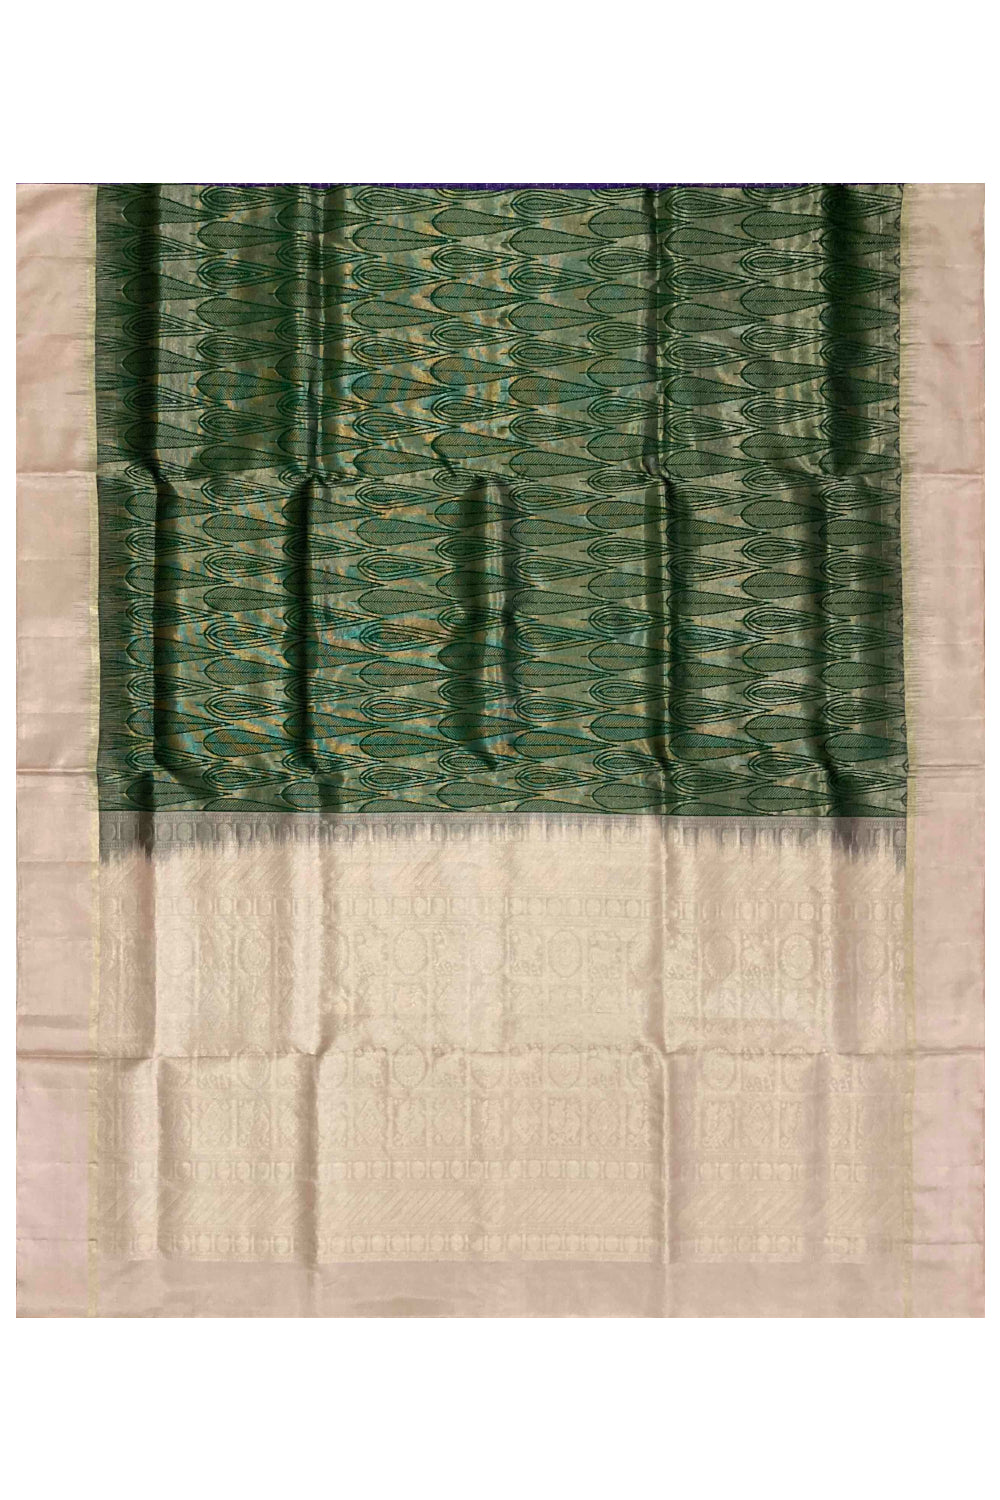 Southloom Handloom Pure Silk Kanchipuram Saree in Green Leaf Work and Beige Border